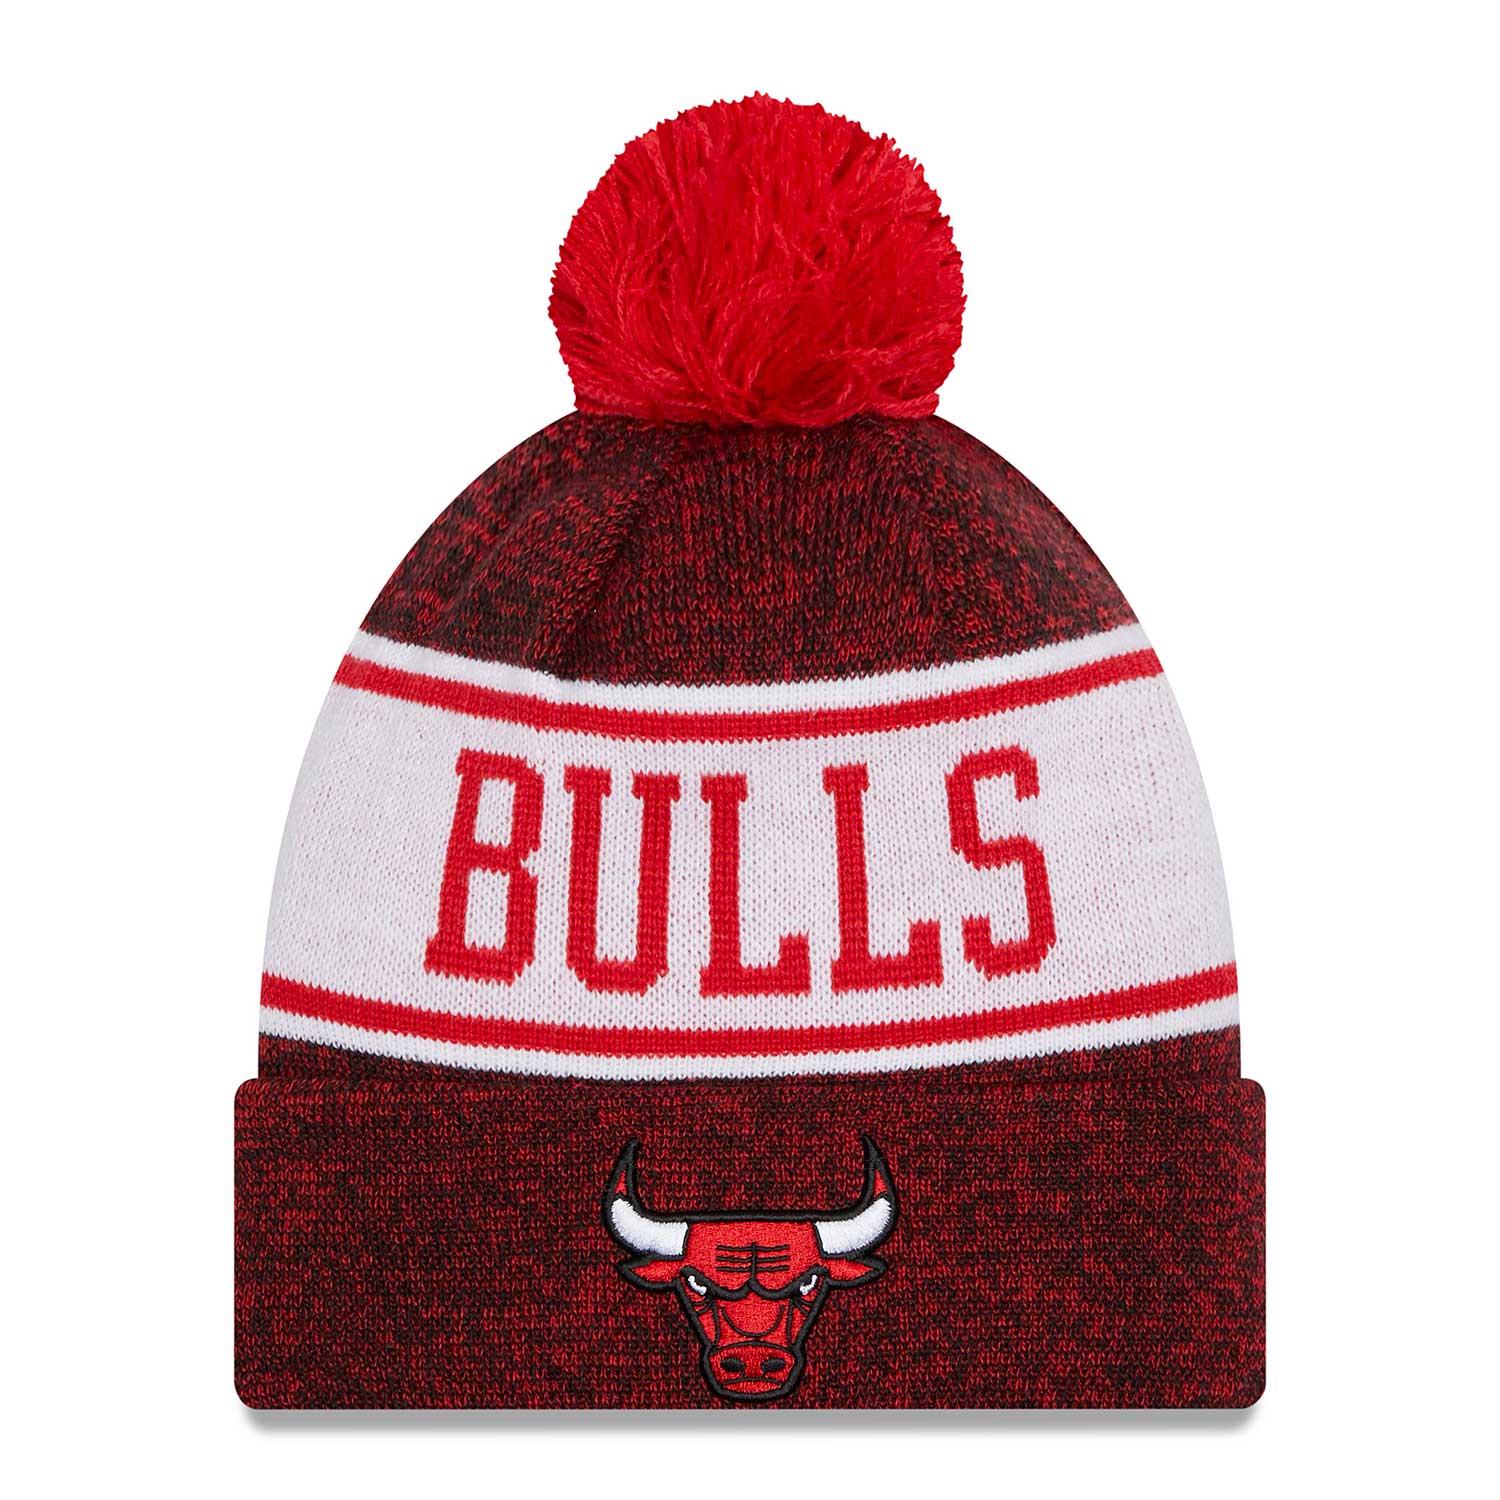 Black New Era NBA Chicago Bulls Pom Beanie Hat